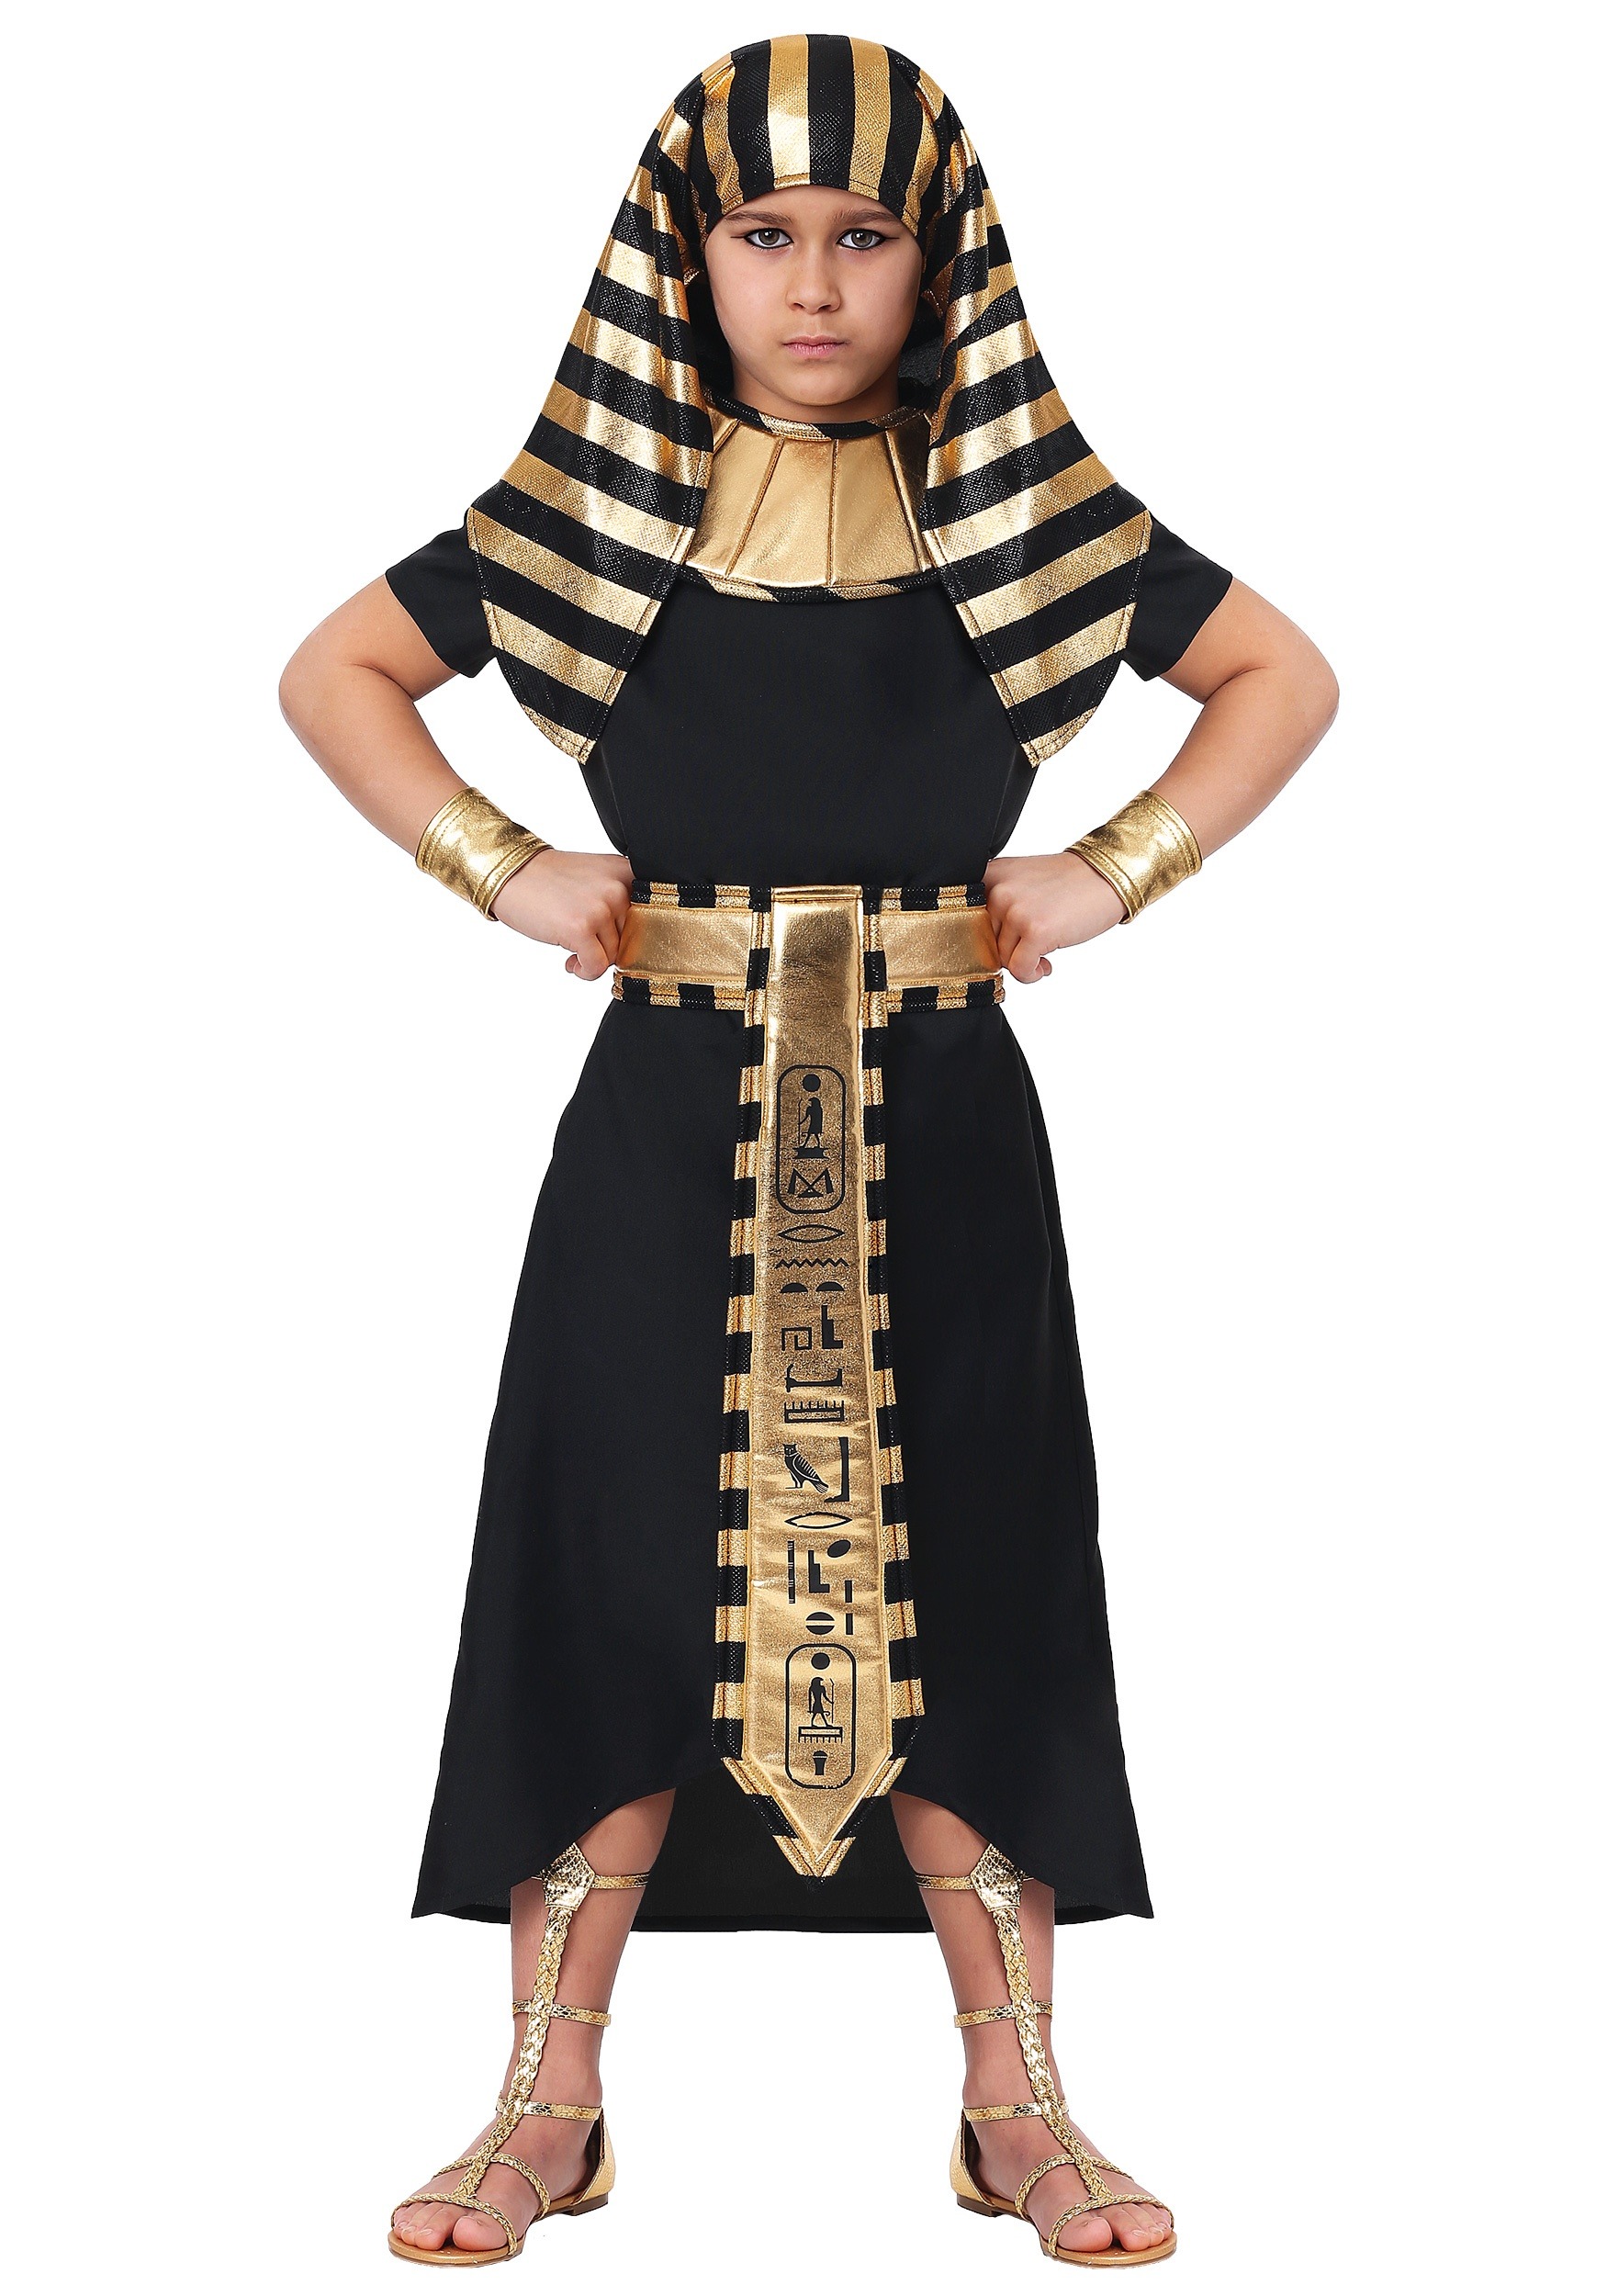 Egyptian Pharaoh Costume For A Child